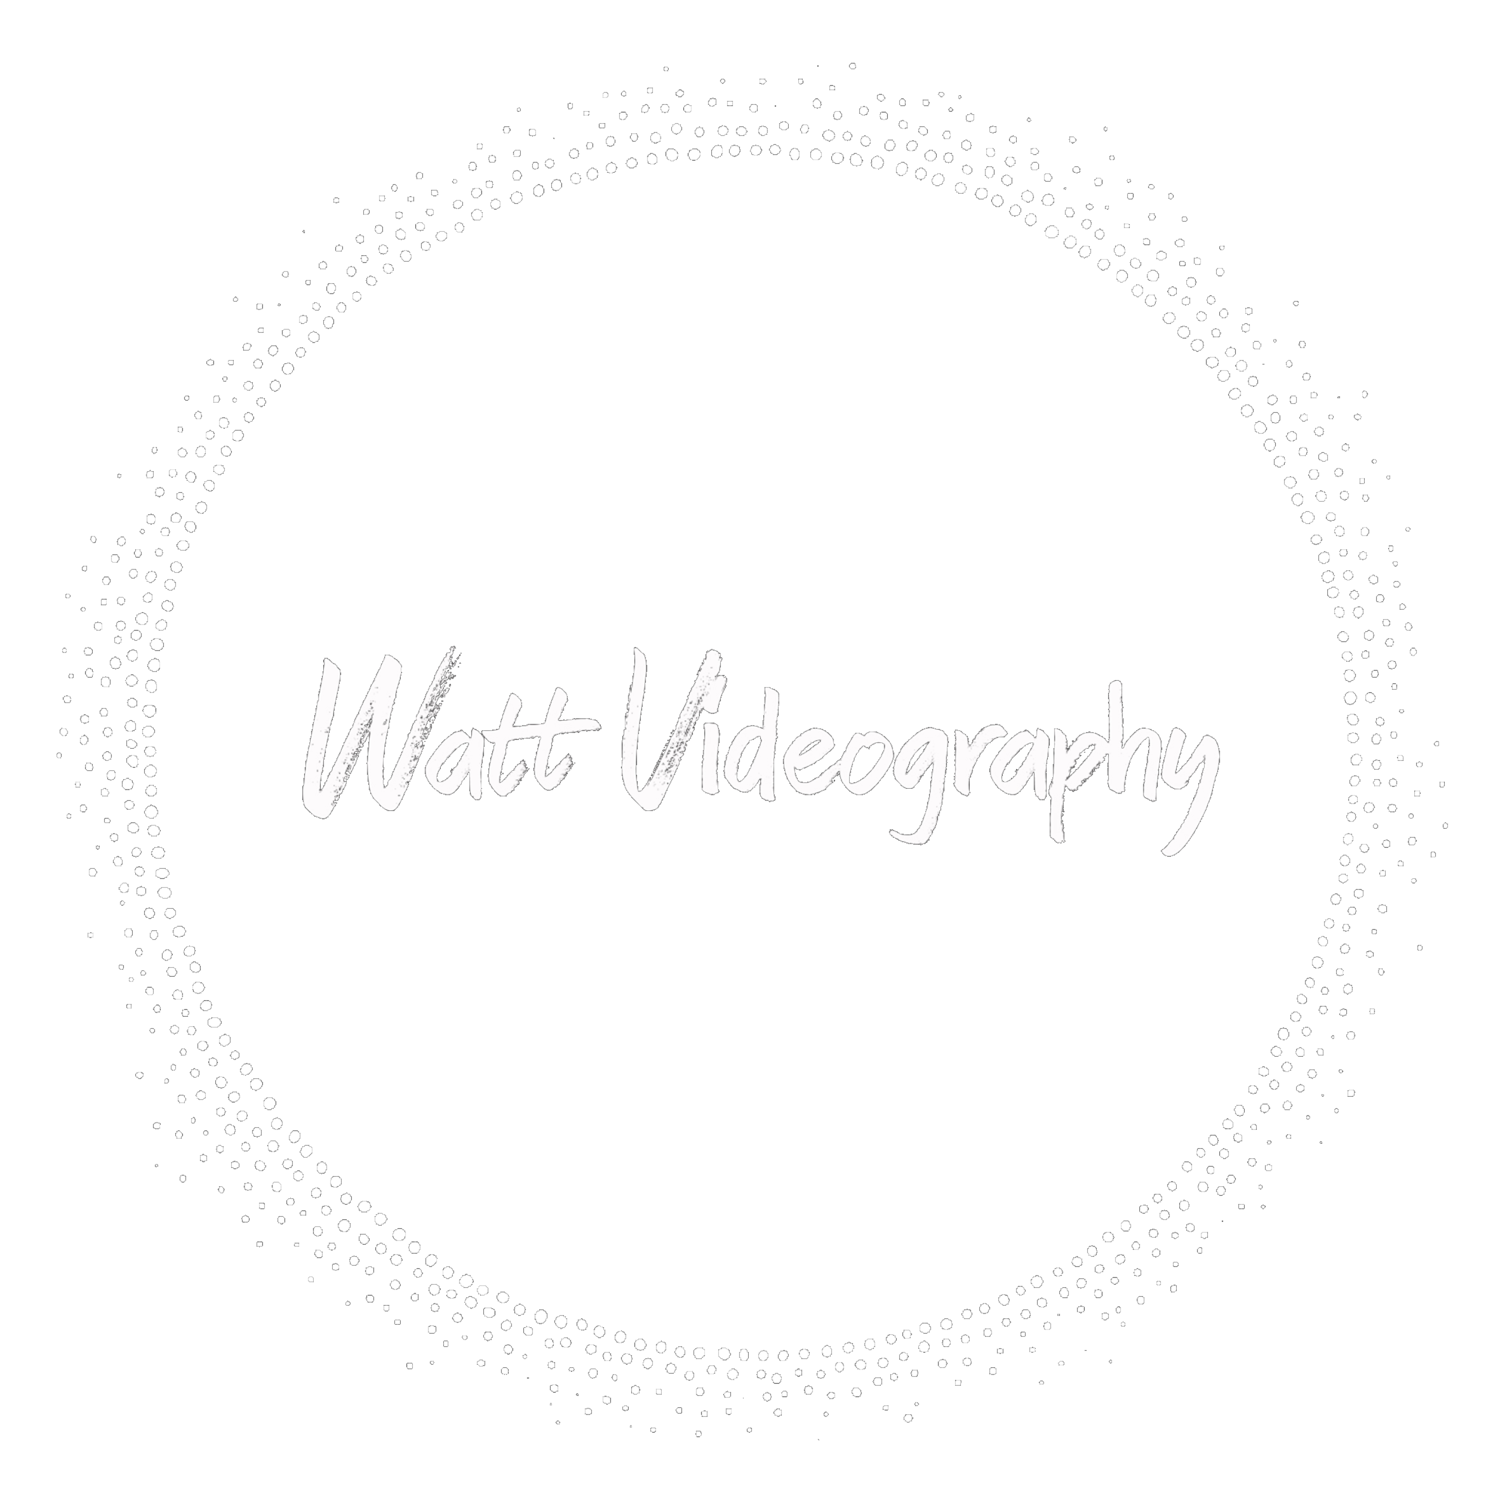 Watt Videography